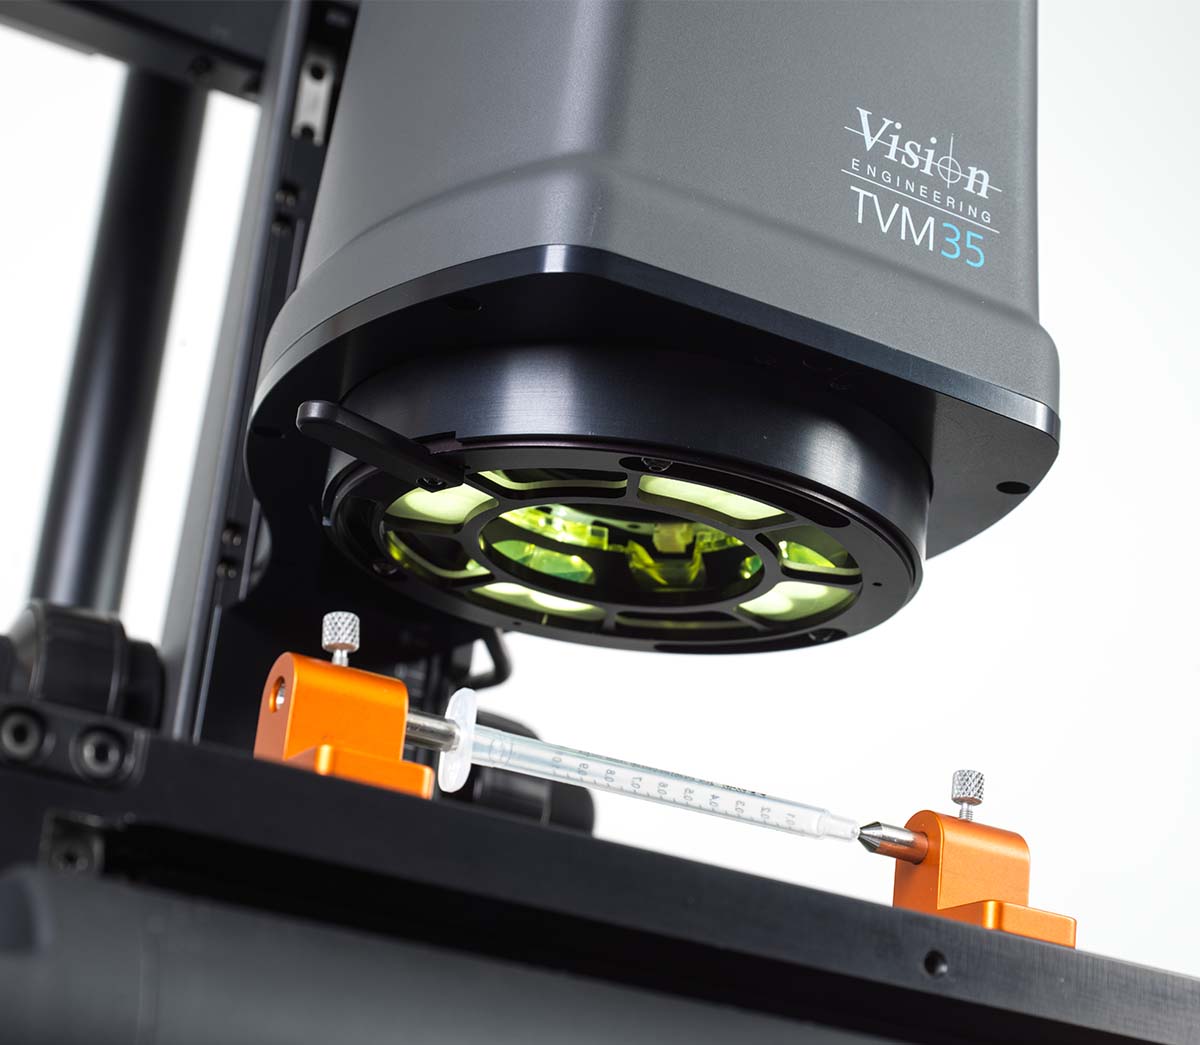 TVM digital video measuring system